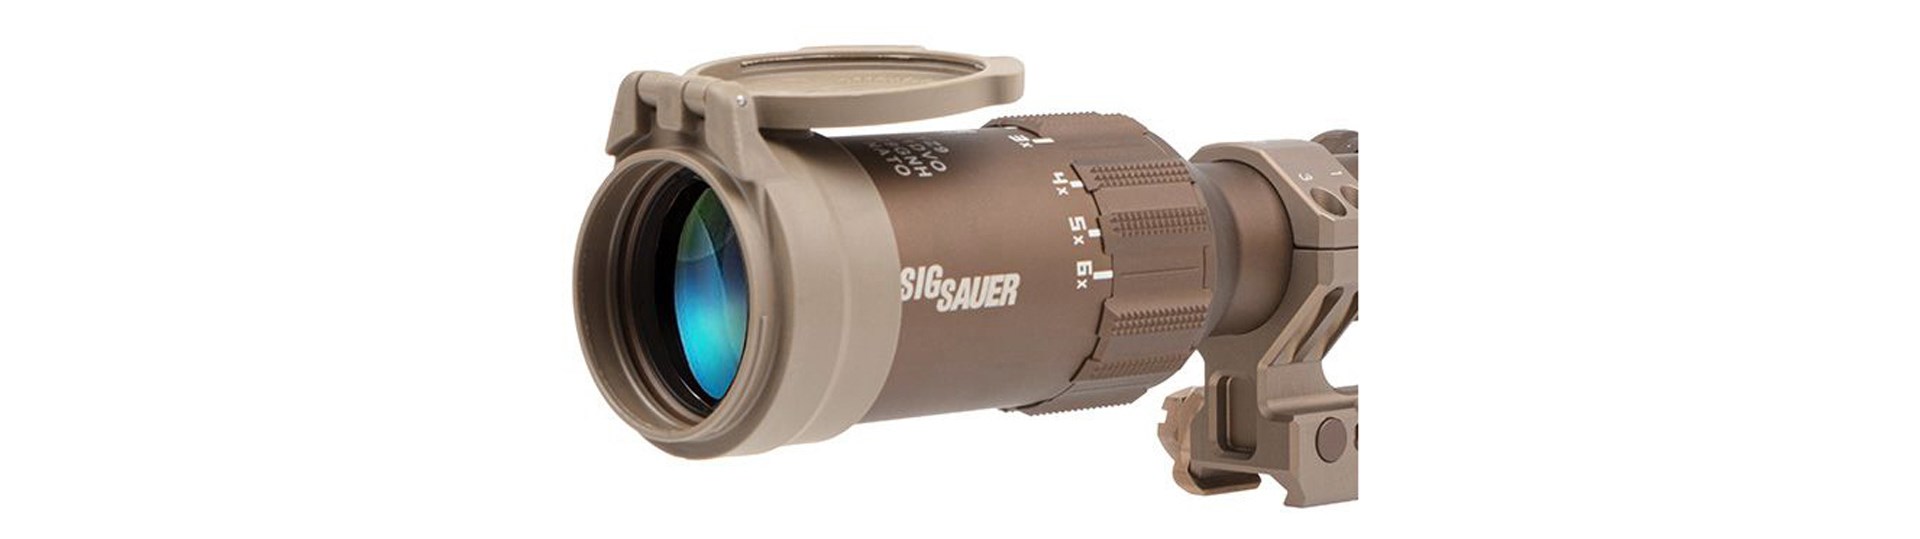 sig sauer lpvo riflescope ocular lens detail closeup brown metal alpha4 mount shown on right side